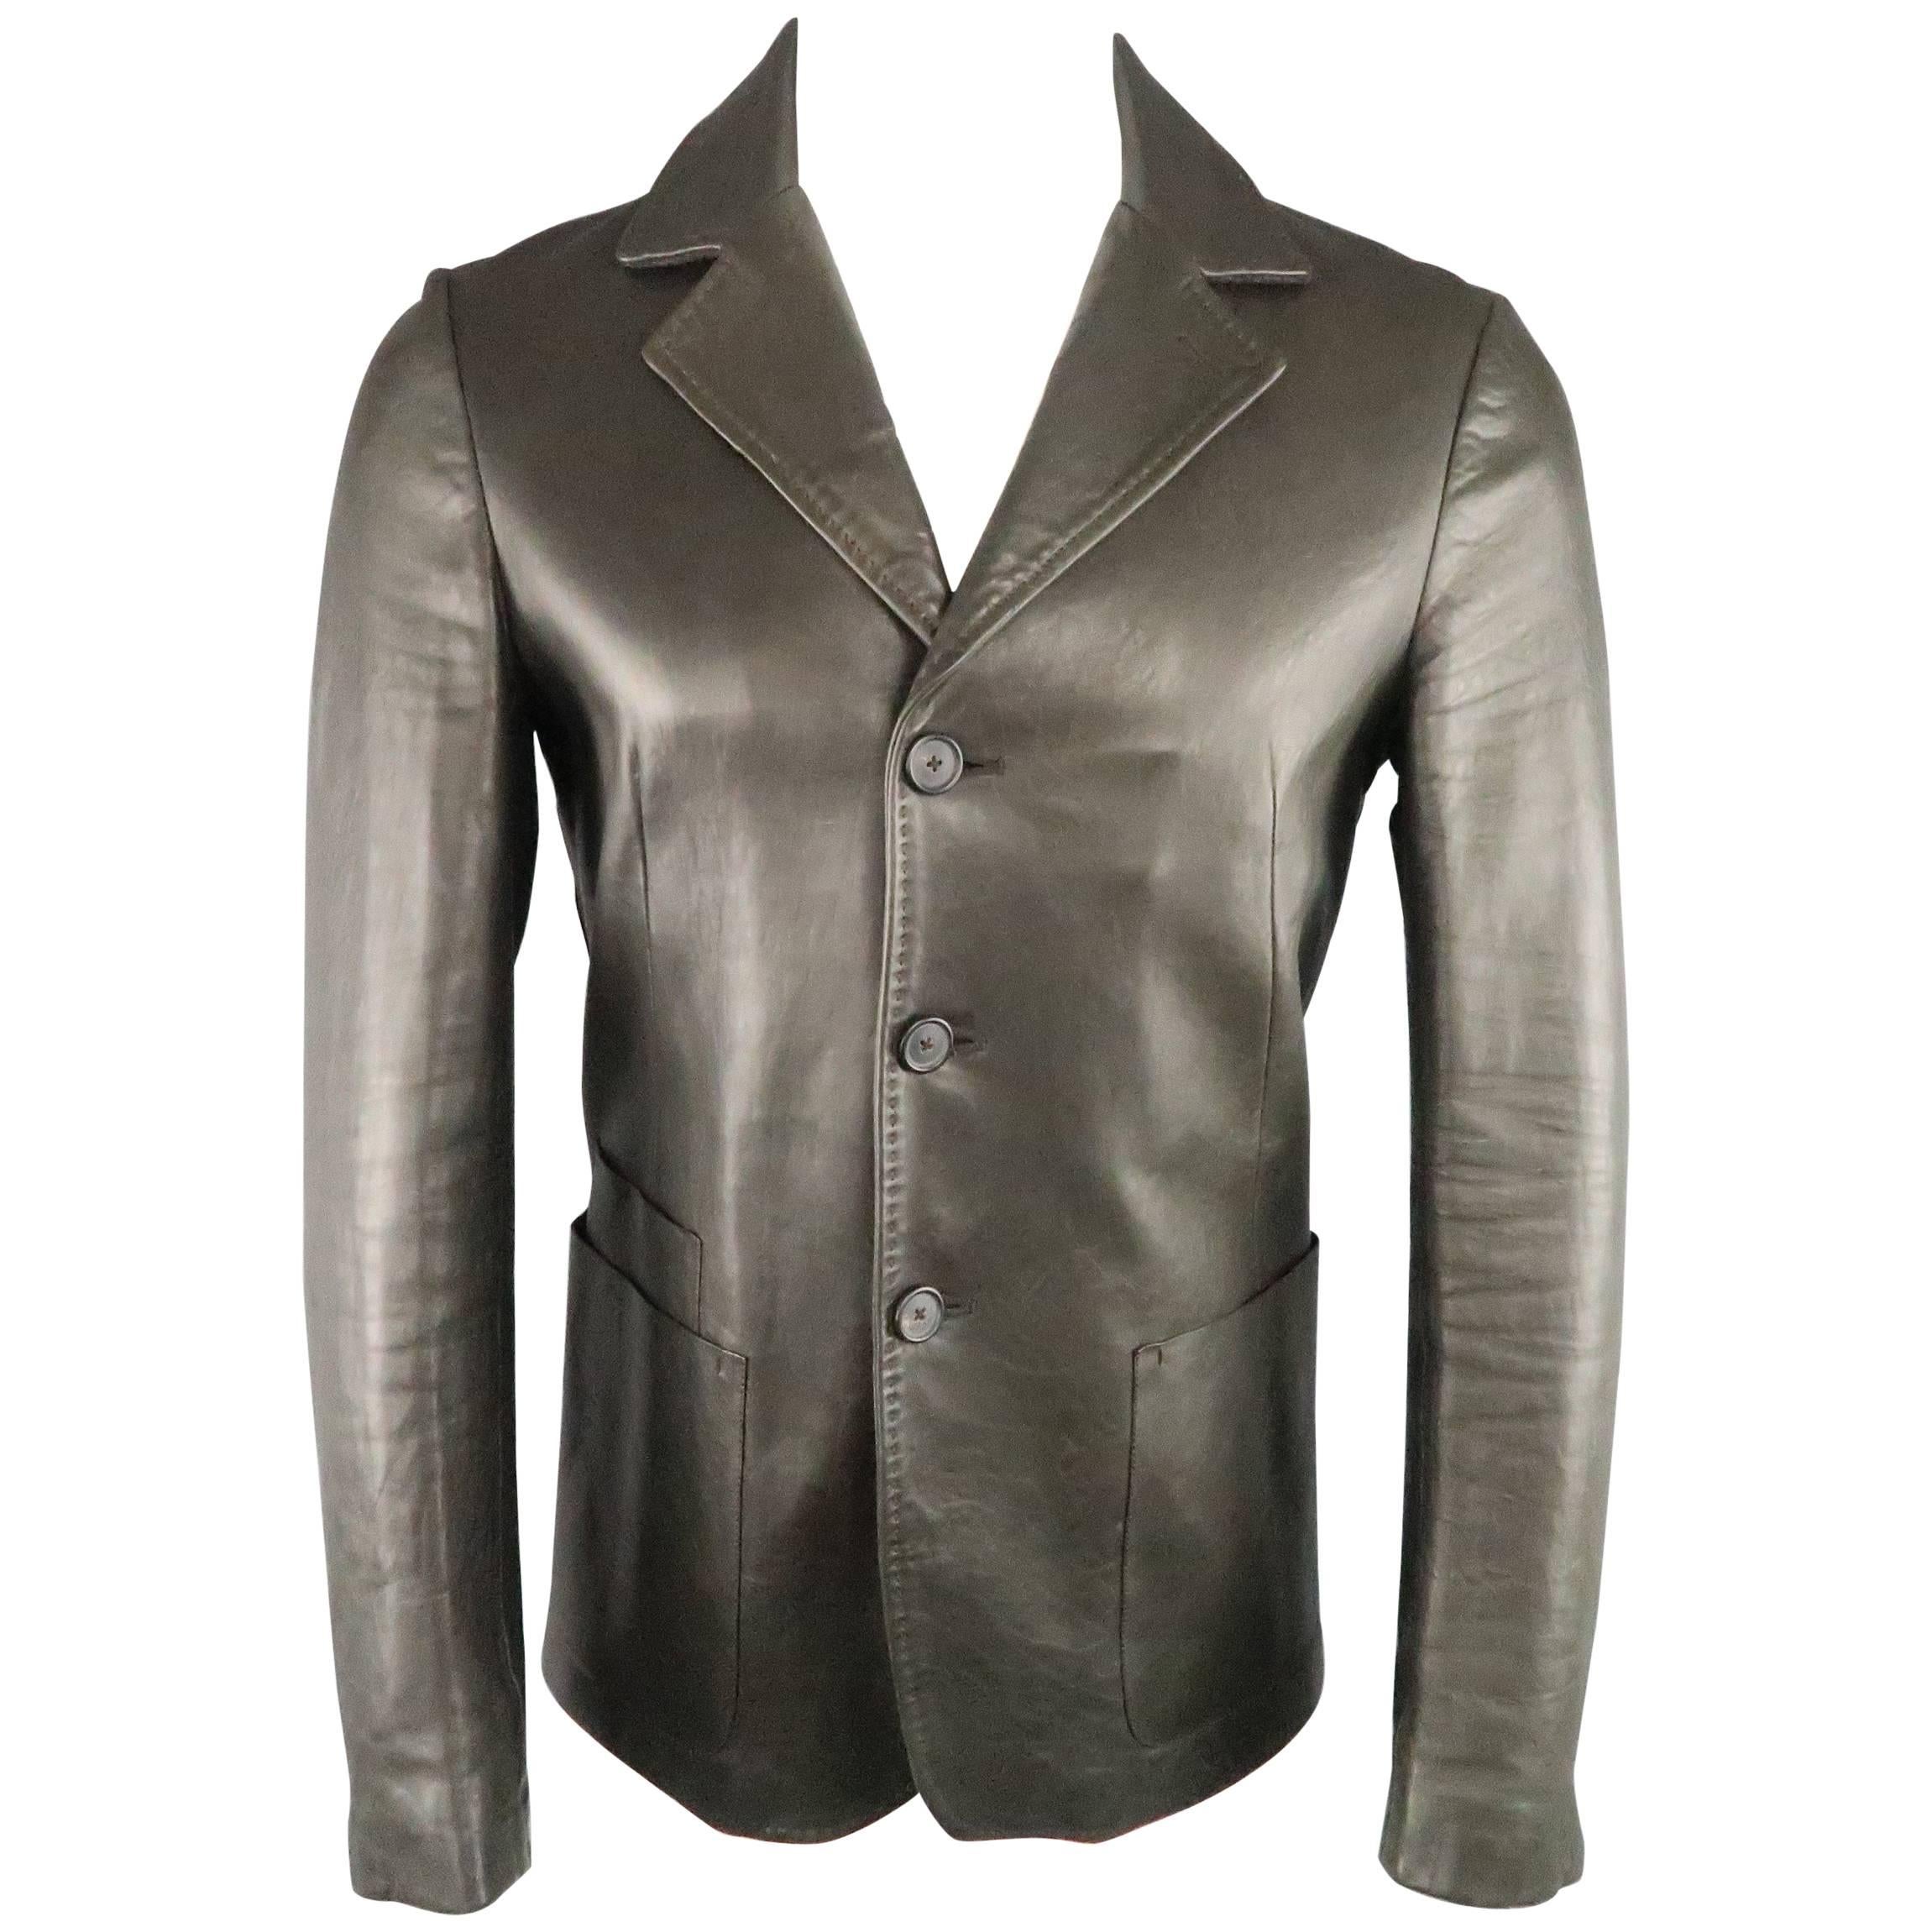  JIL SANDER Leather Jacket 36 Charcoal Top Stitch Sport Coat 